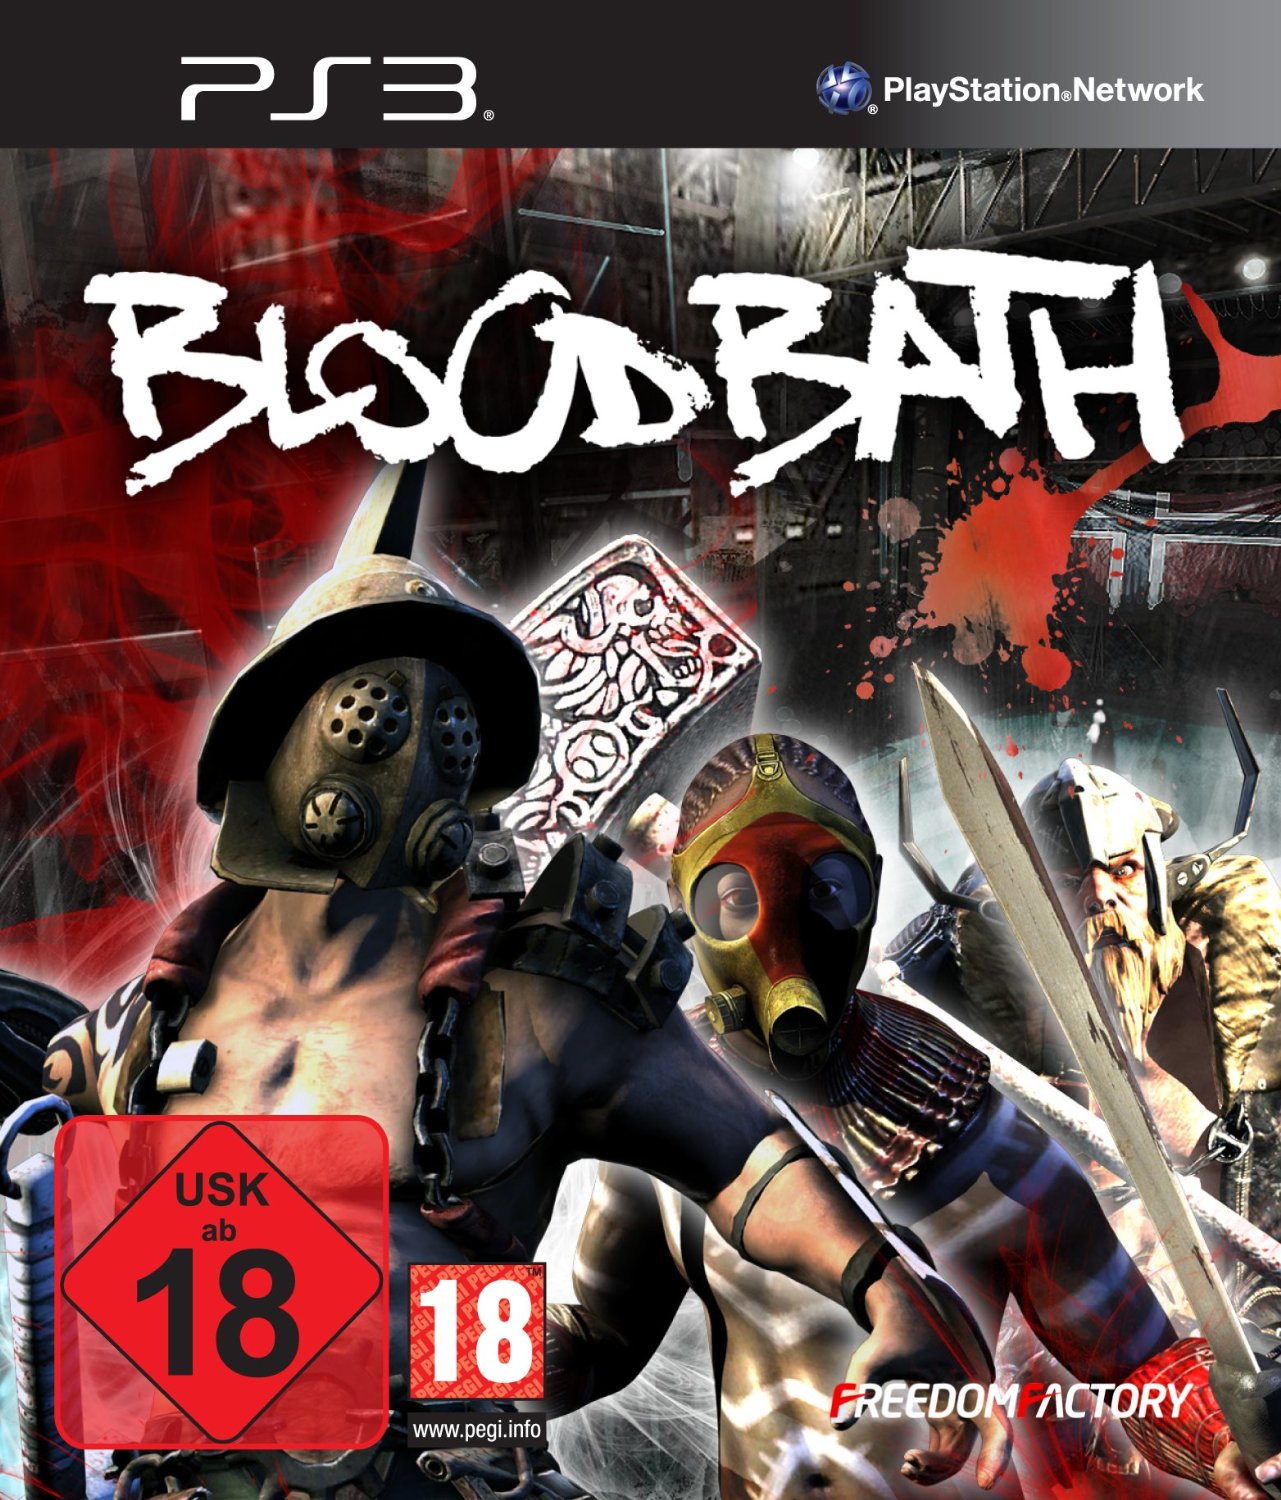 Blood Bath PS3